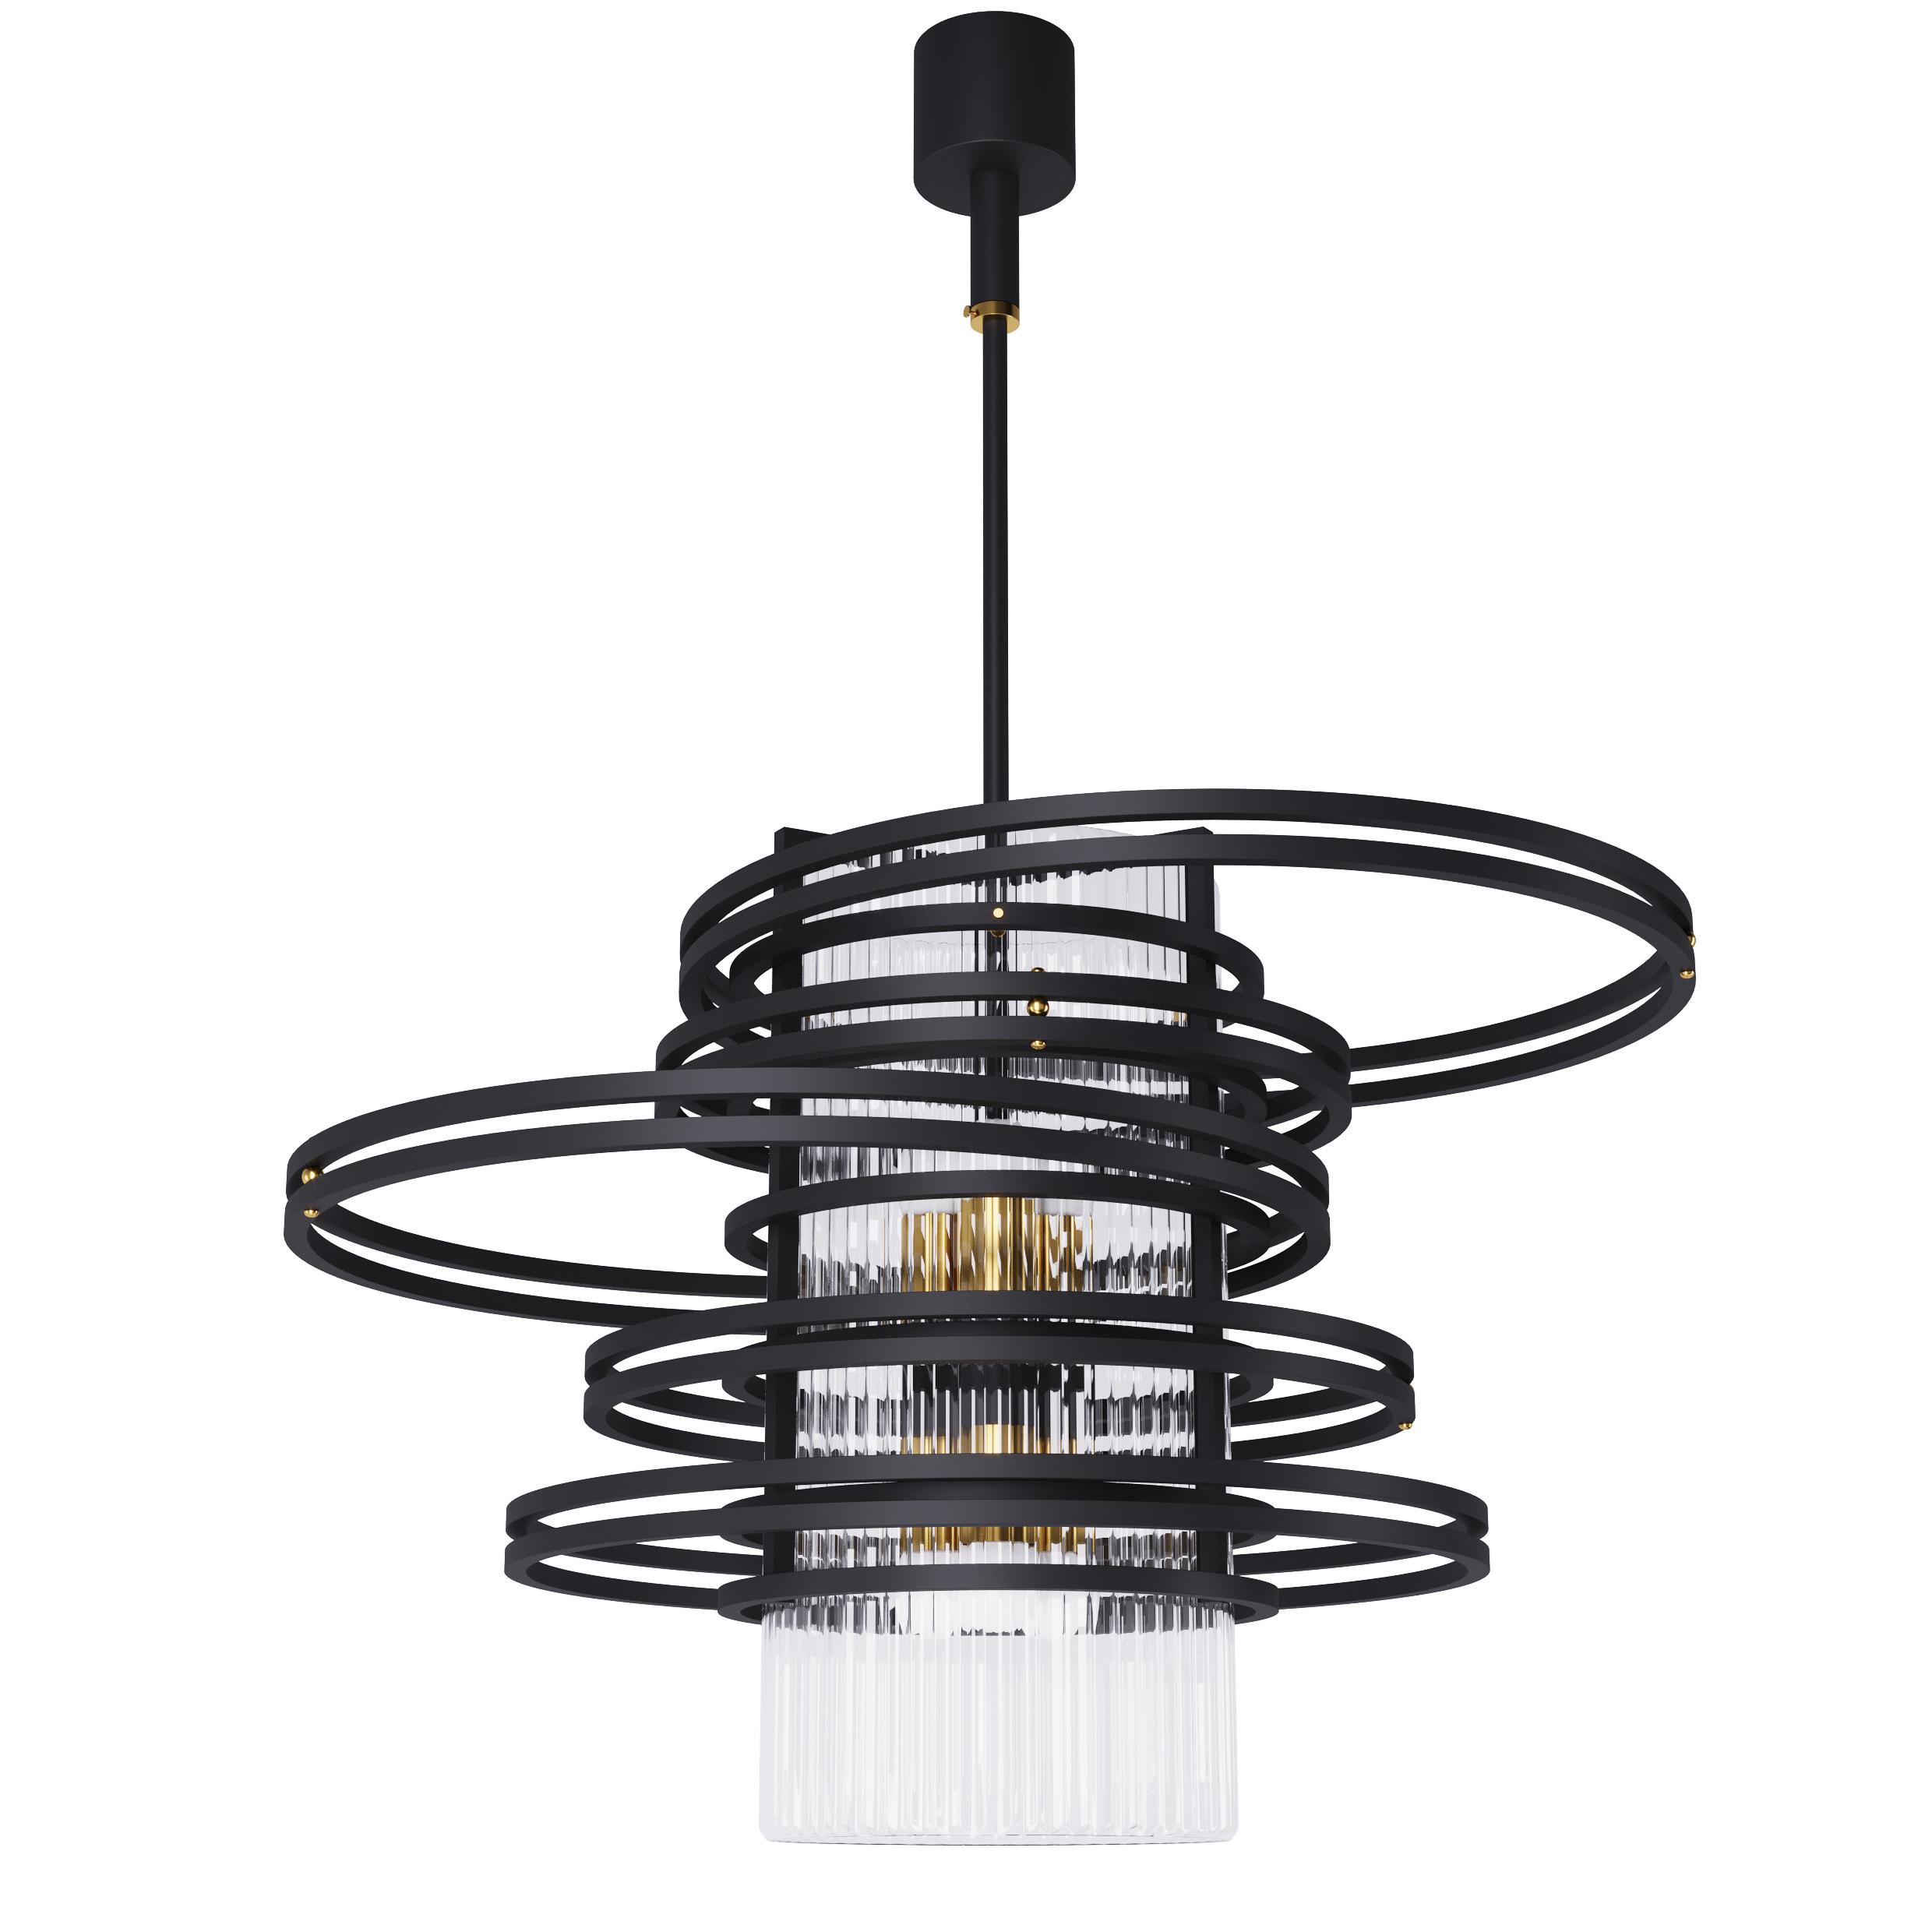 Circles lamp, SKU. 21418 by Pikartlights 3d model